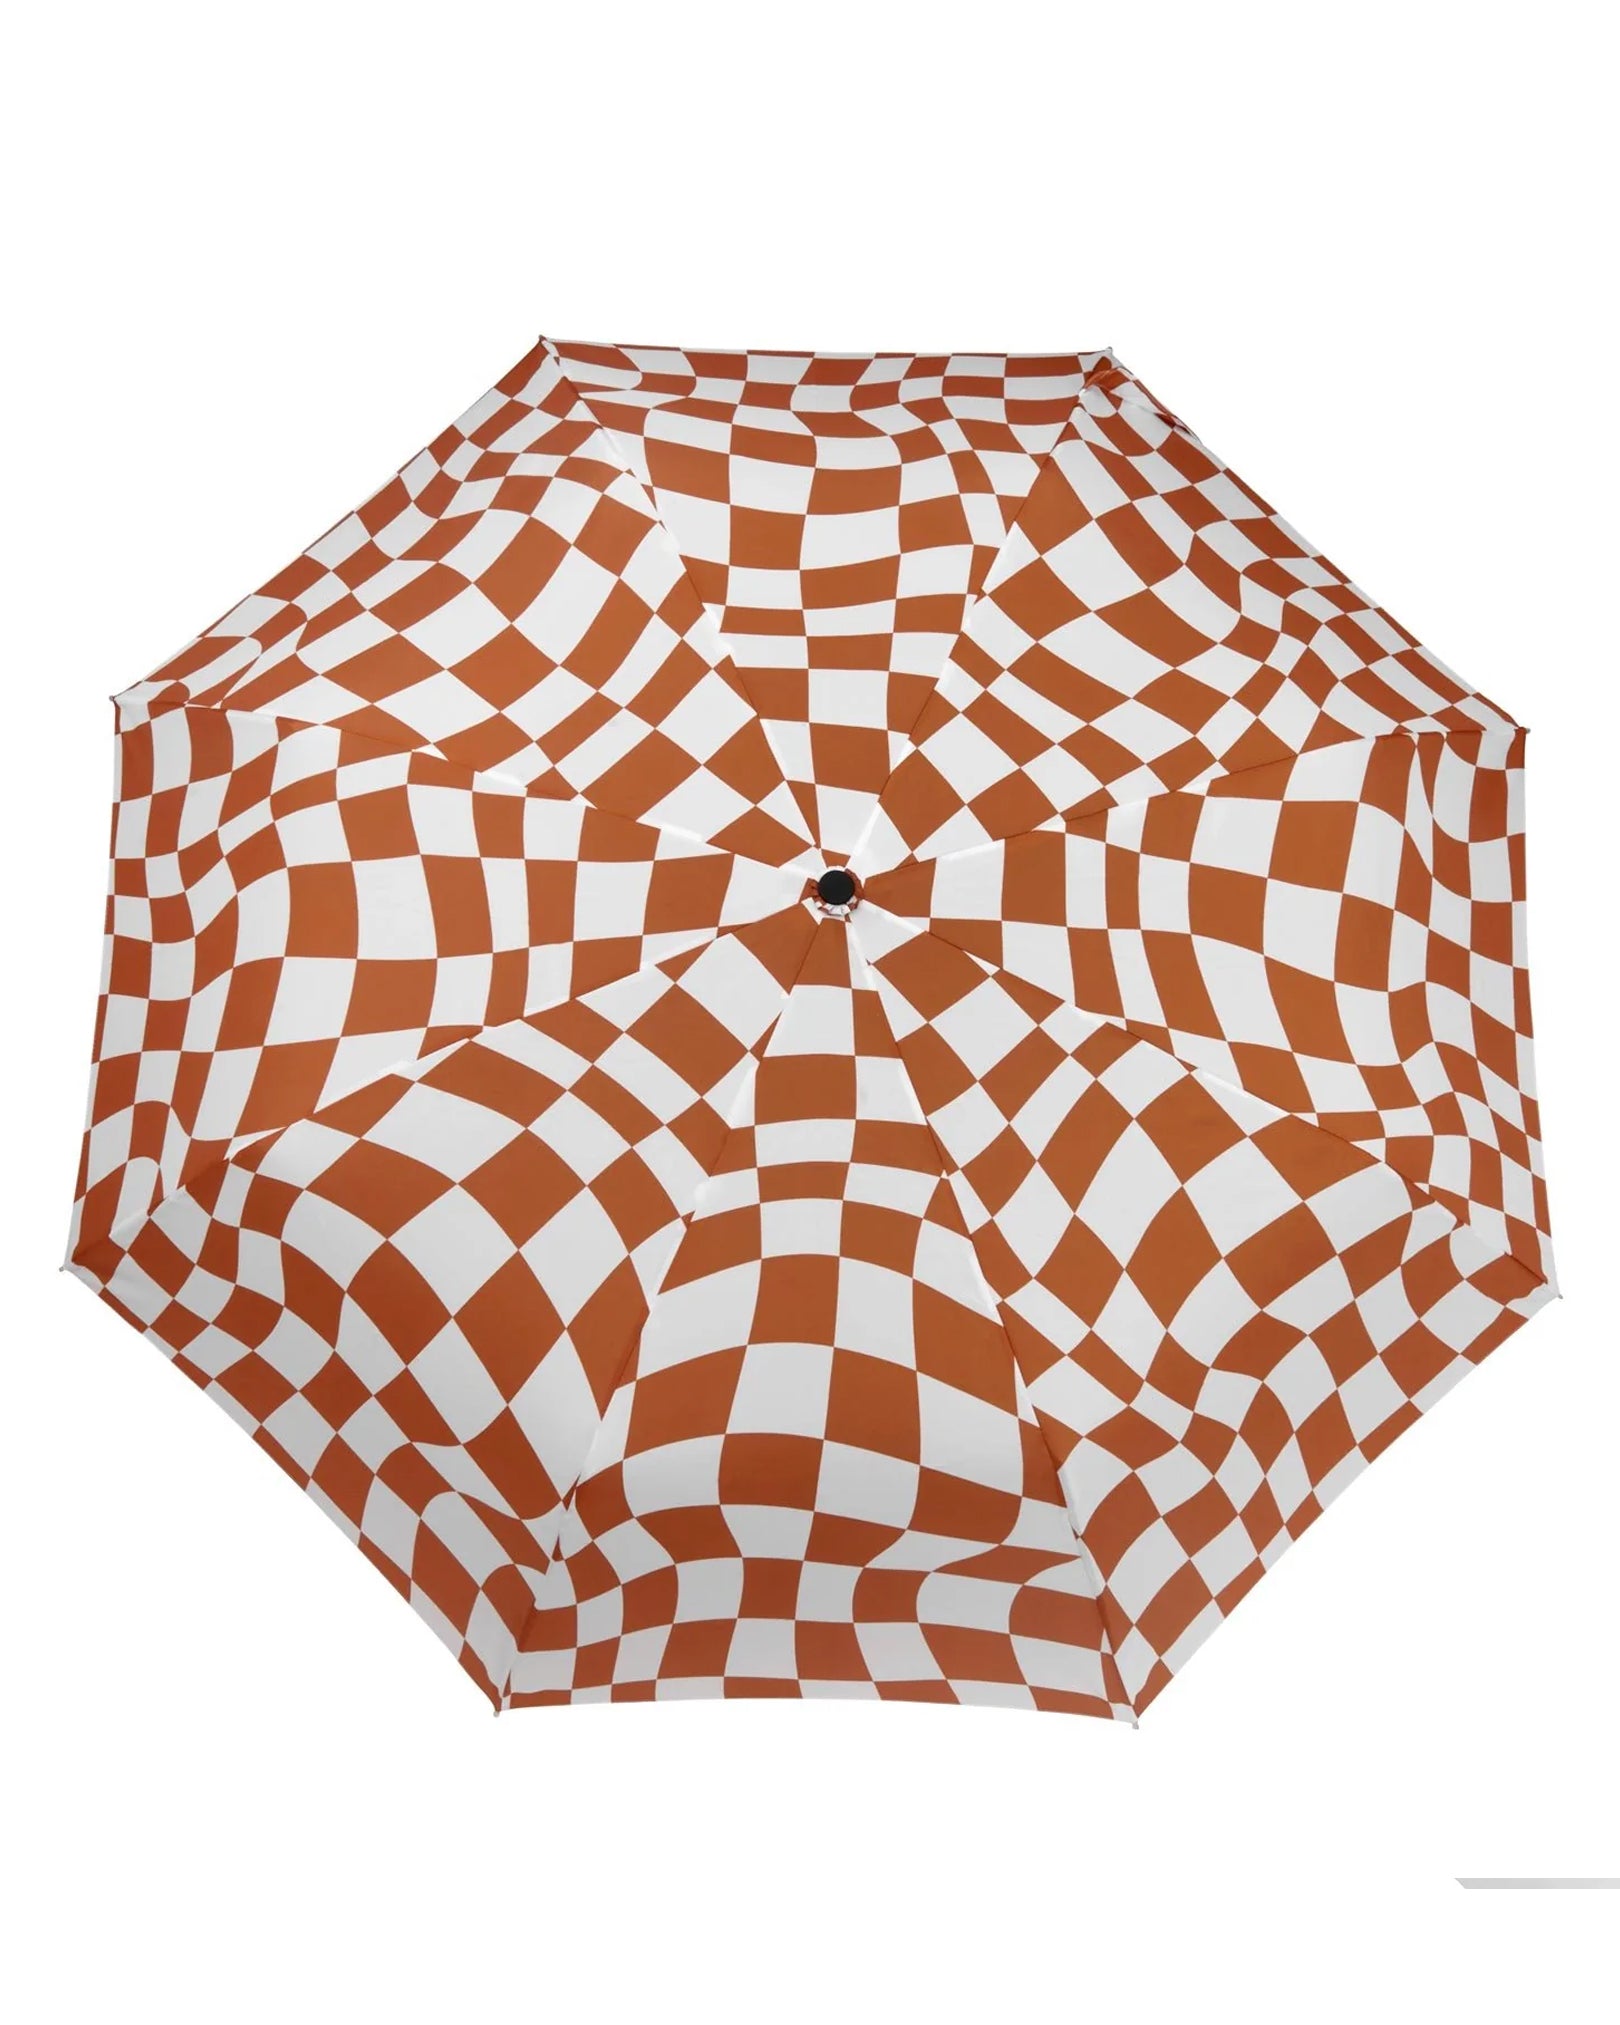 ORIGINAL DUCKHEAD Compact Umbrella in Peanut Butter Checkers available at Lahn.shop